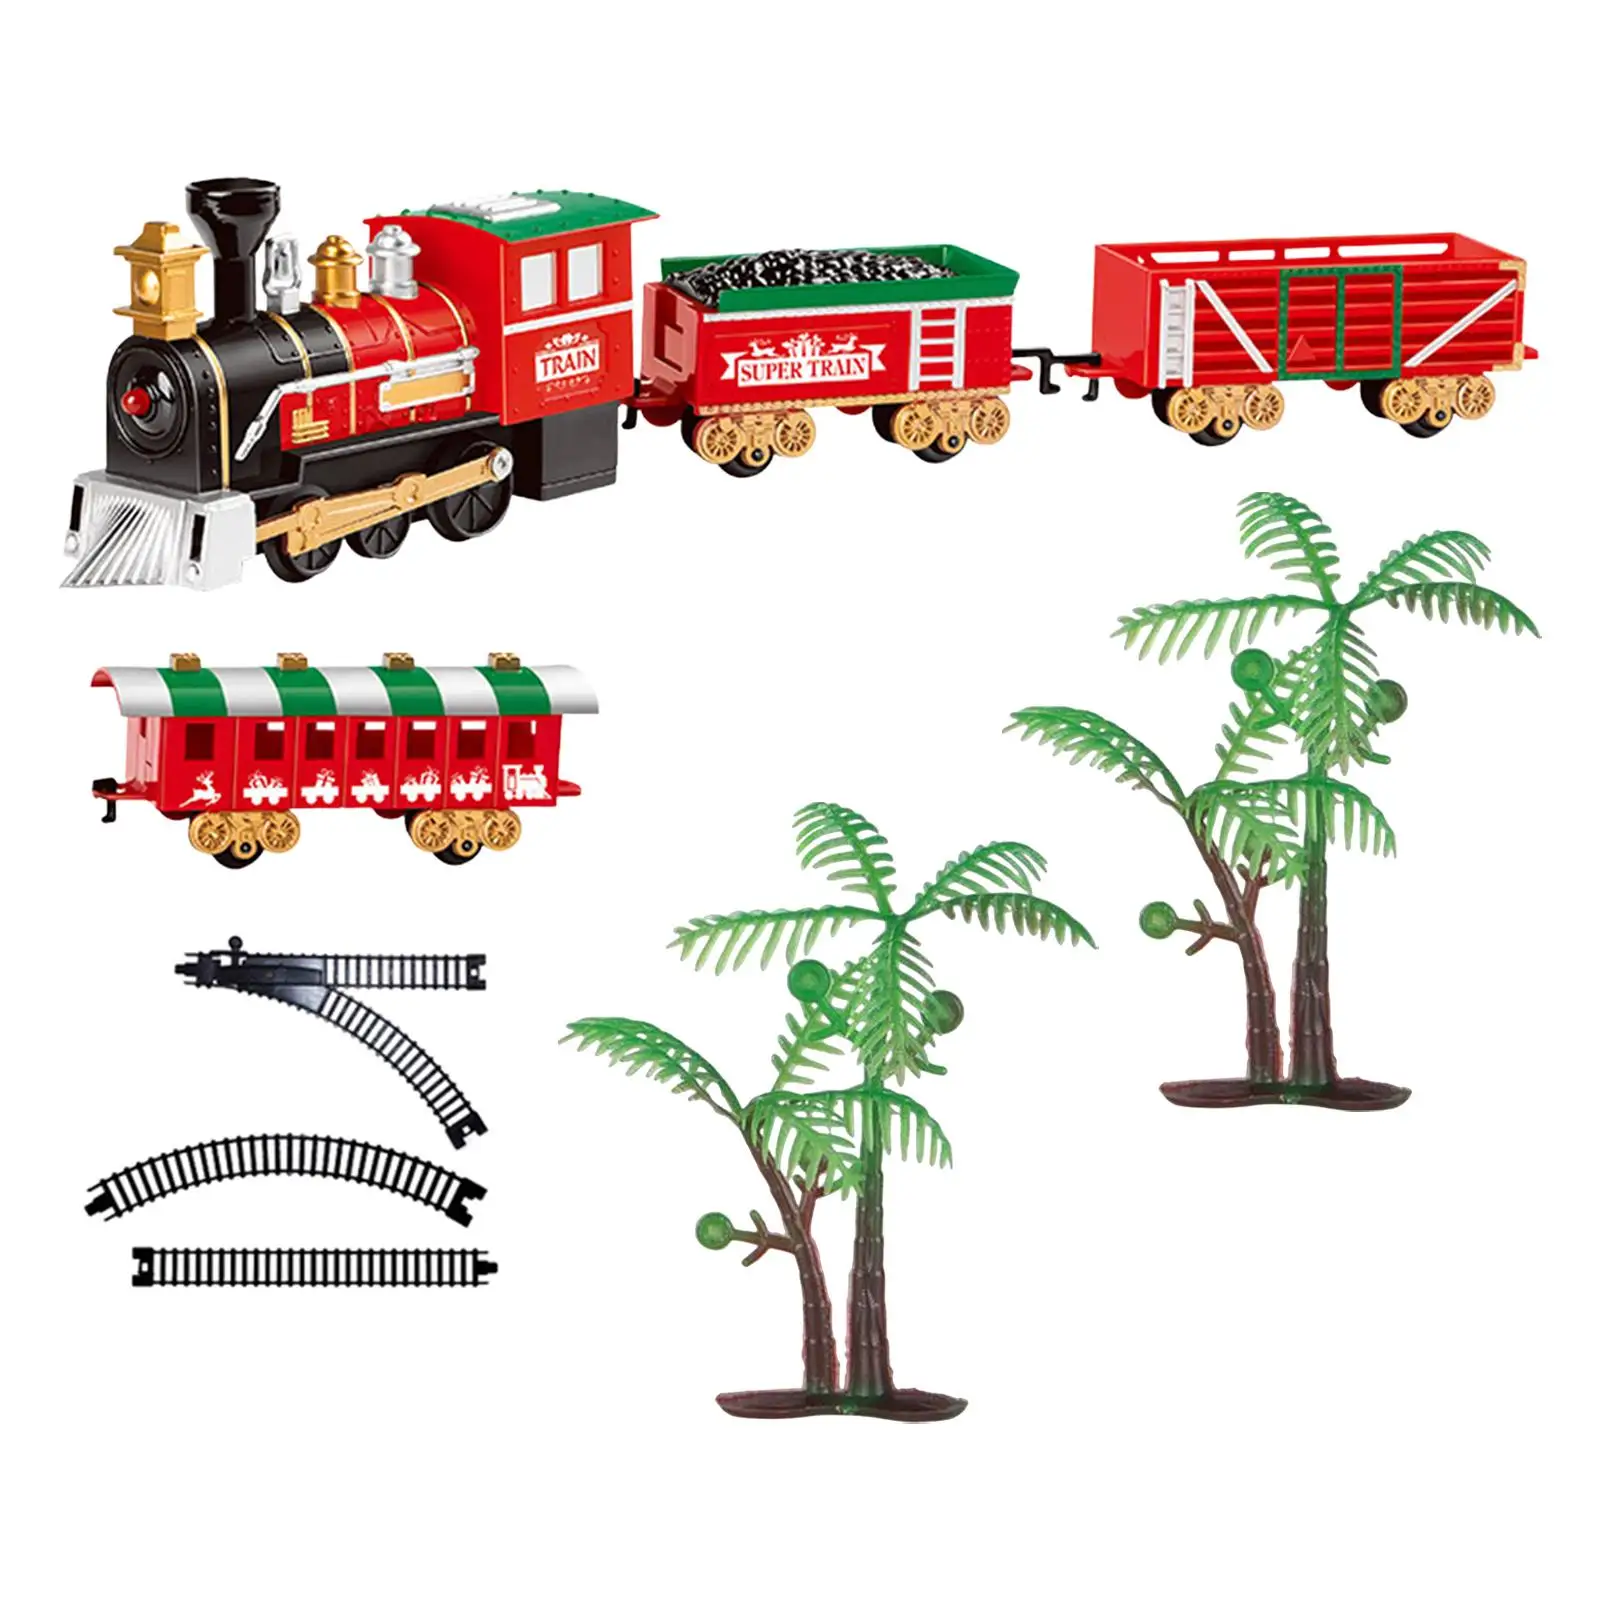 Christmas Tree Train Set Railway Kit Early Leaning Education Toy Railway Track Set for Children Girls Boys